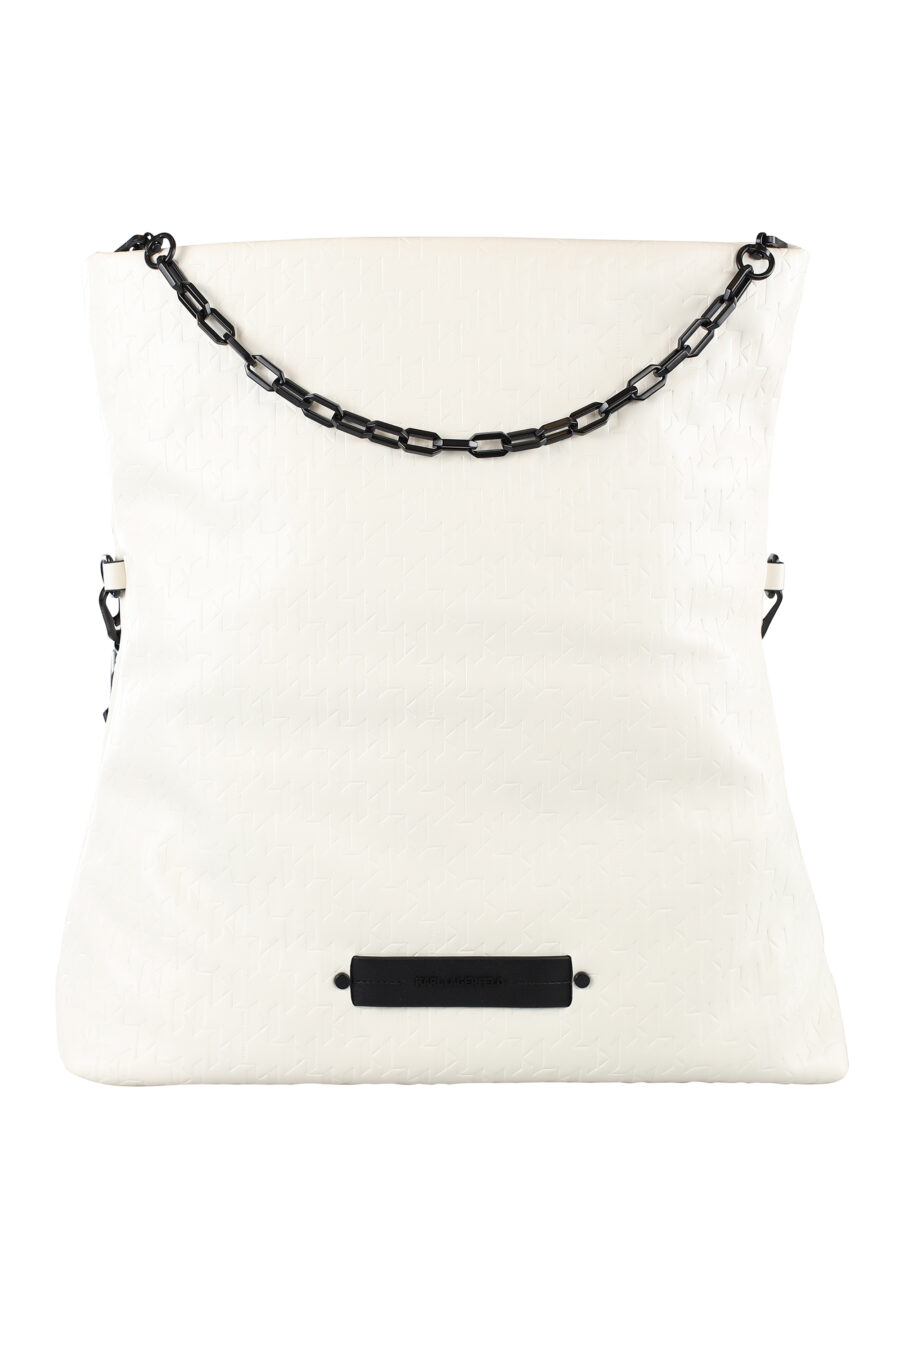 Tote bag white with black logo - IMG 7028